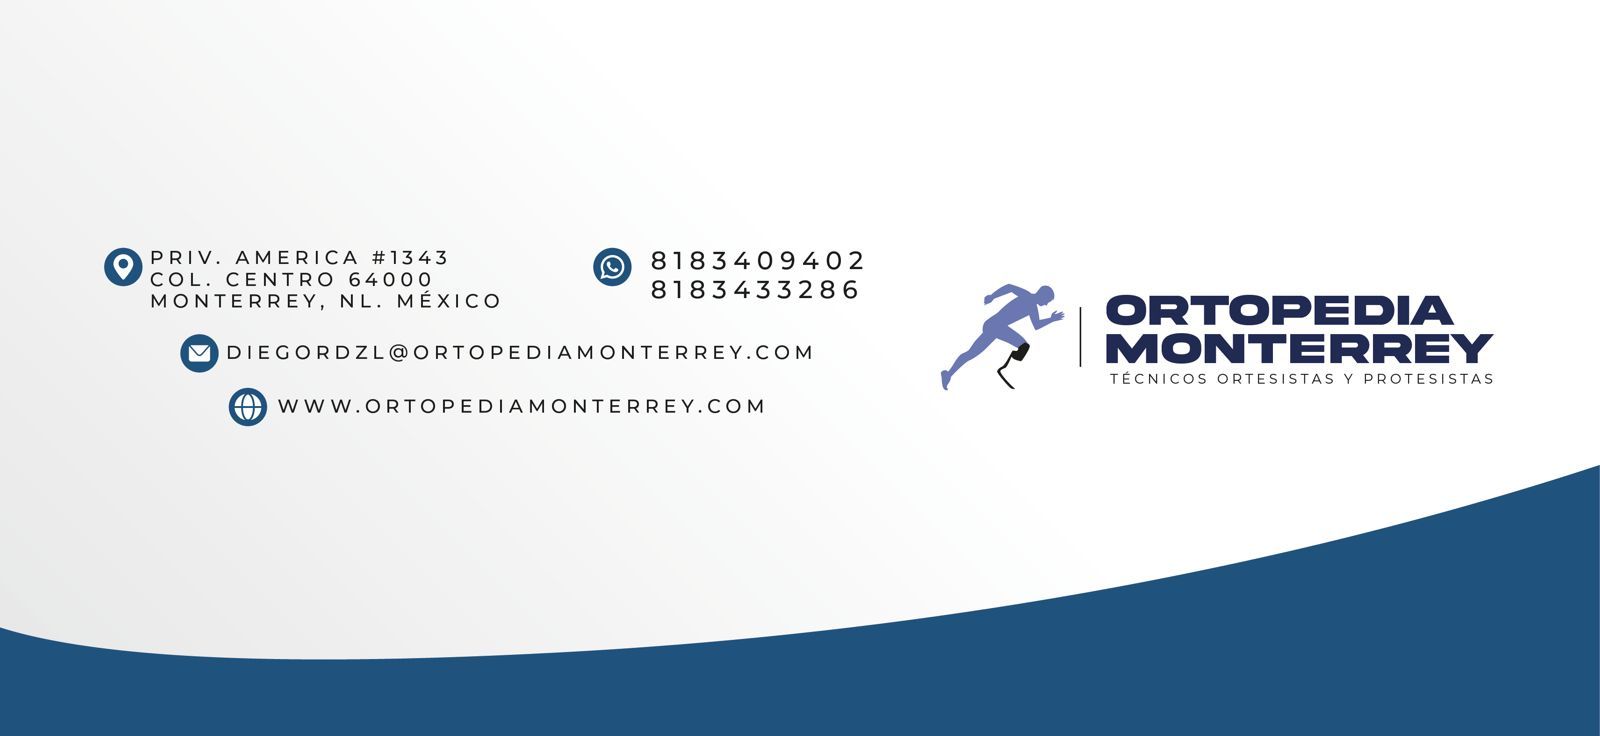 Ortopedia Monterrey logo